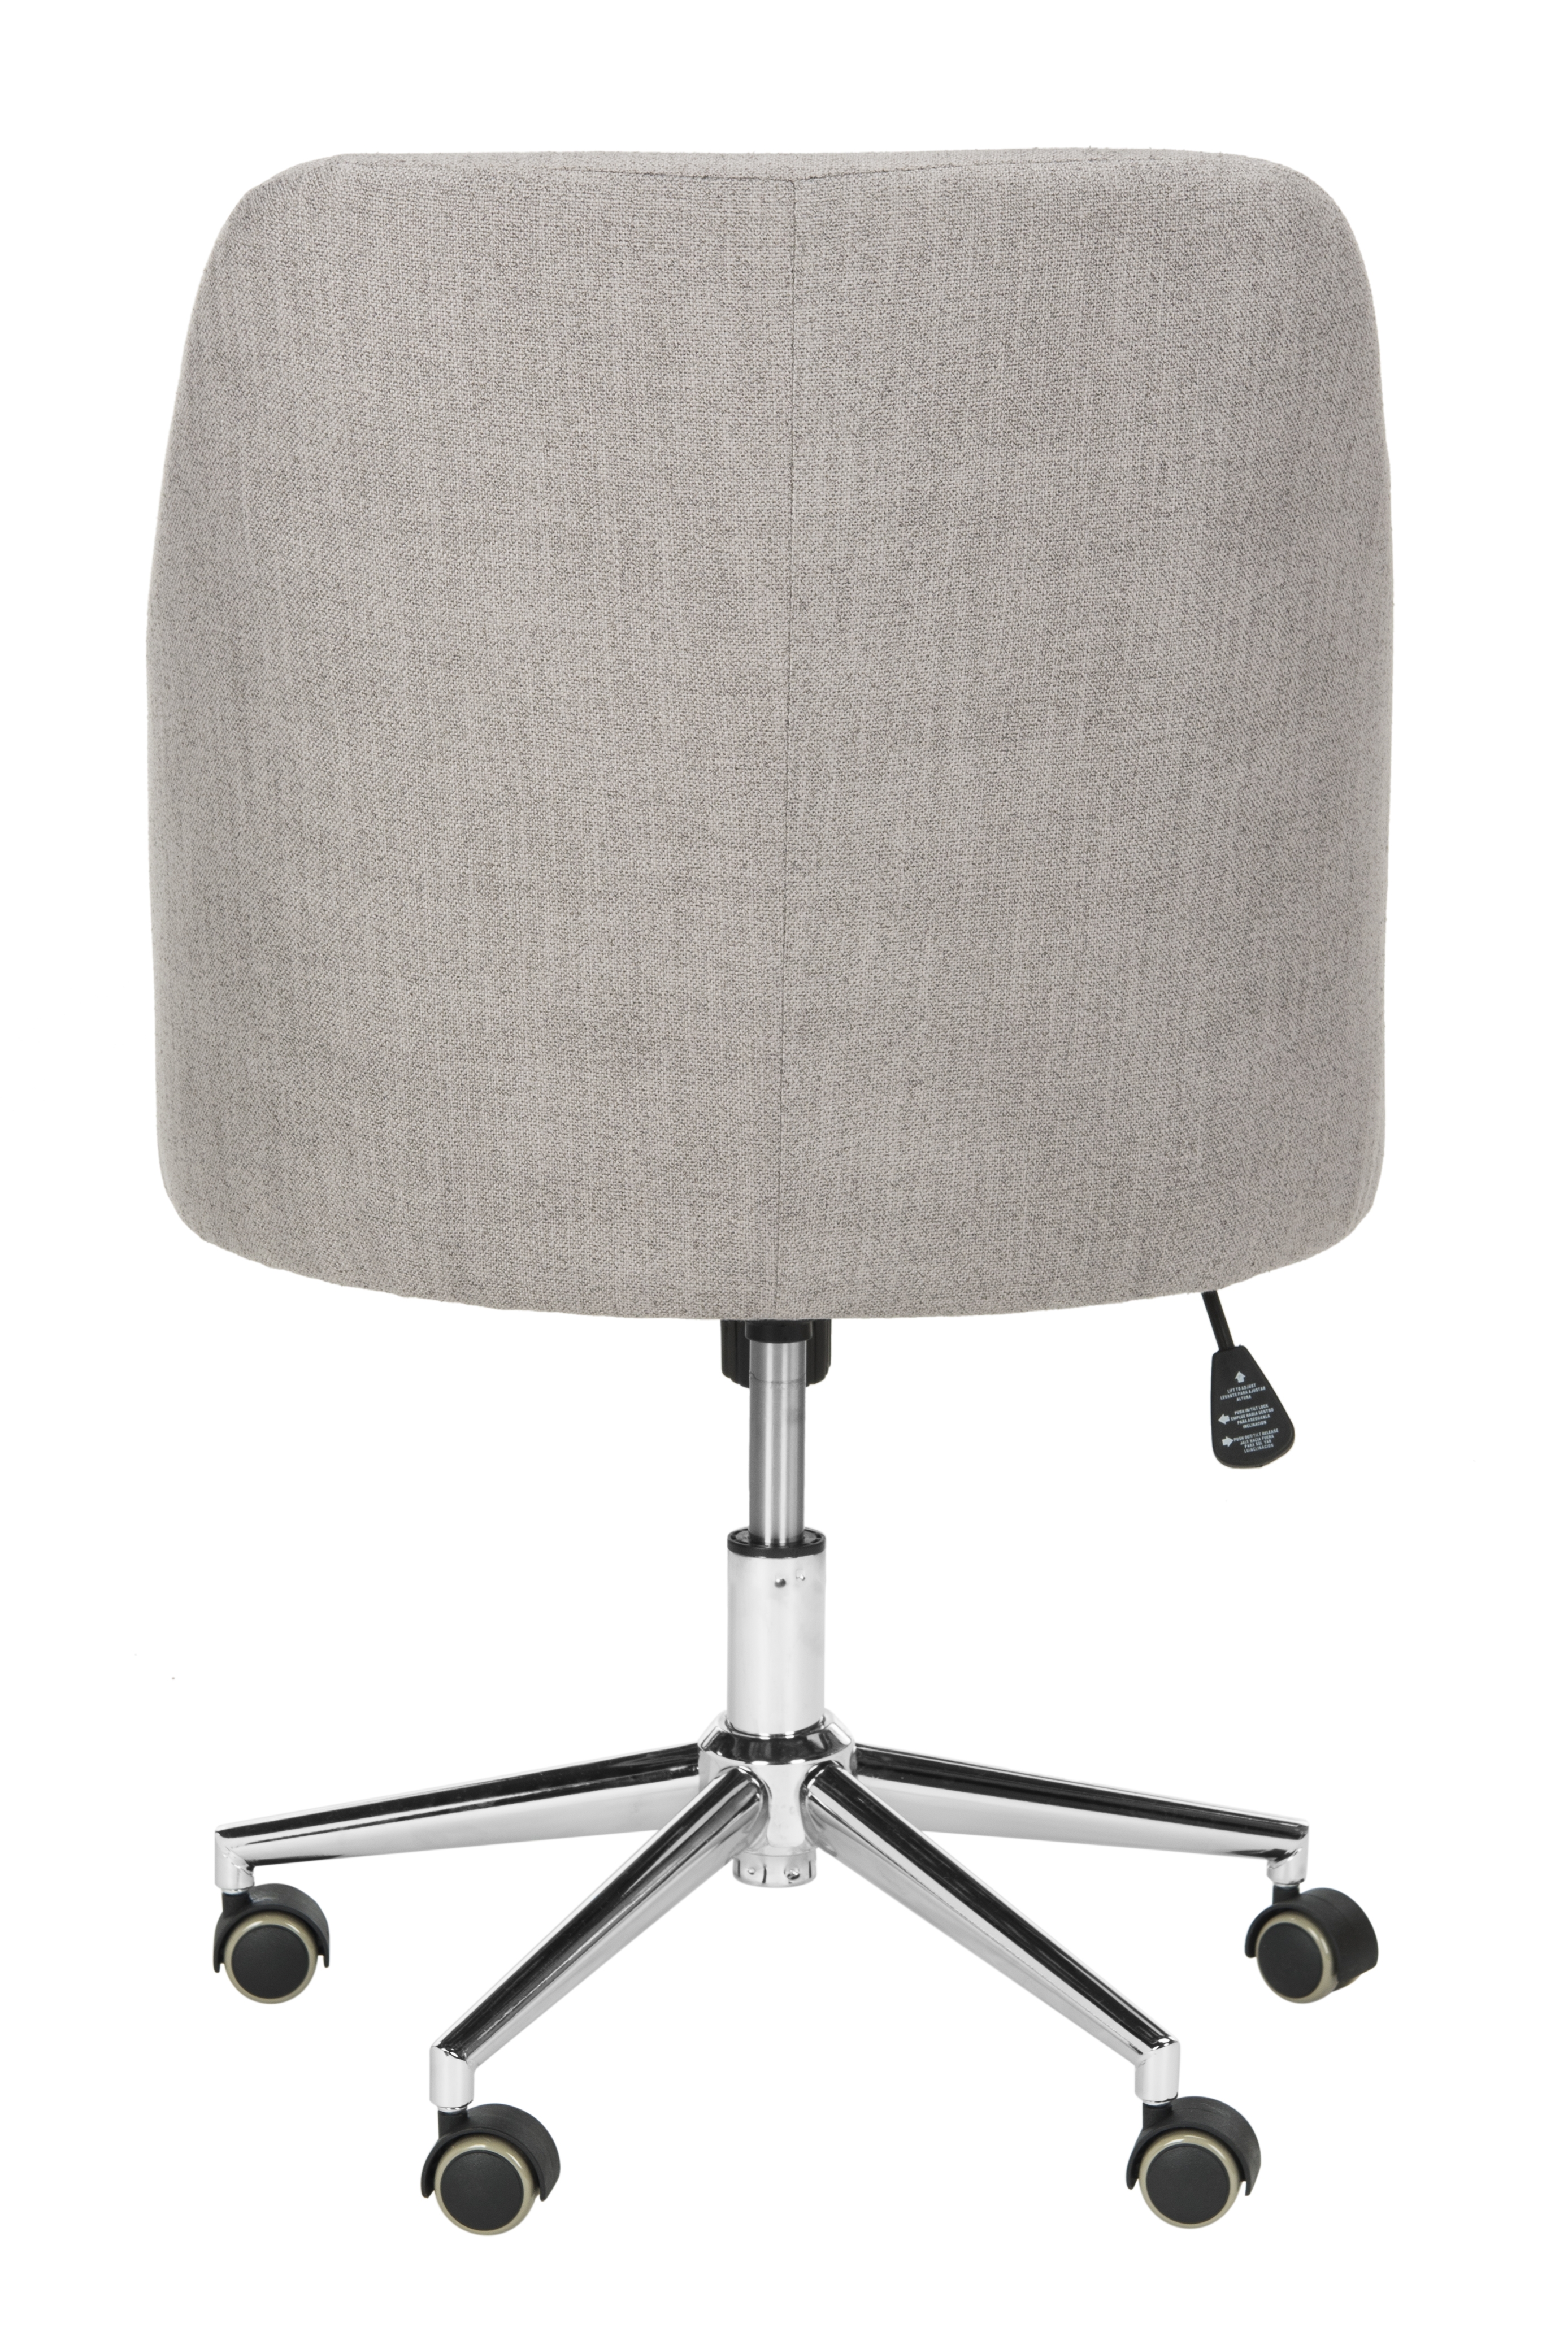 Adrienne Linen Chrome Leg Swivel Office Chair - Grey/Chrome - Arlo Home - Image 2